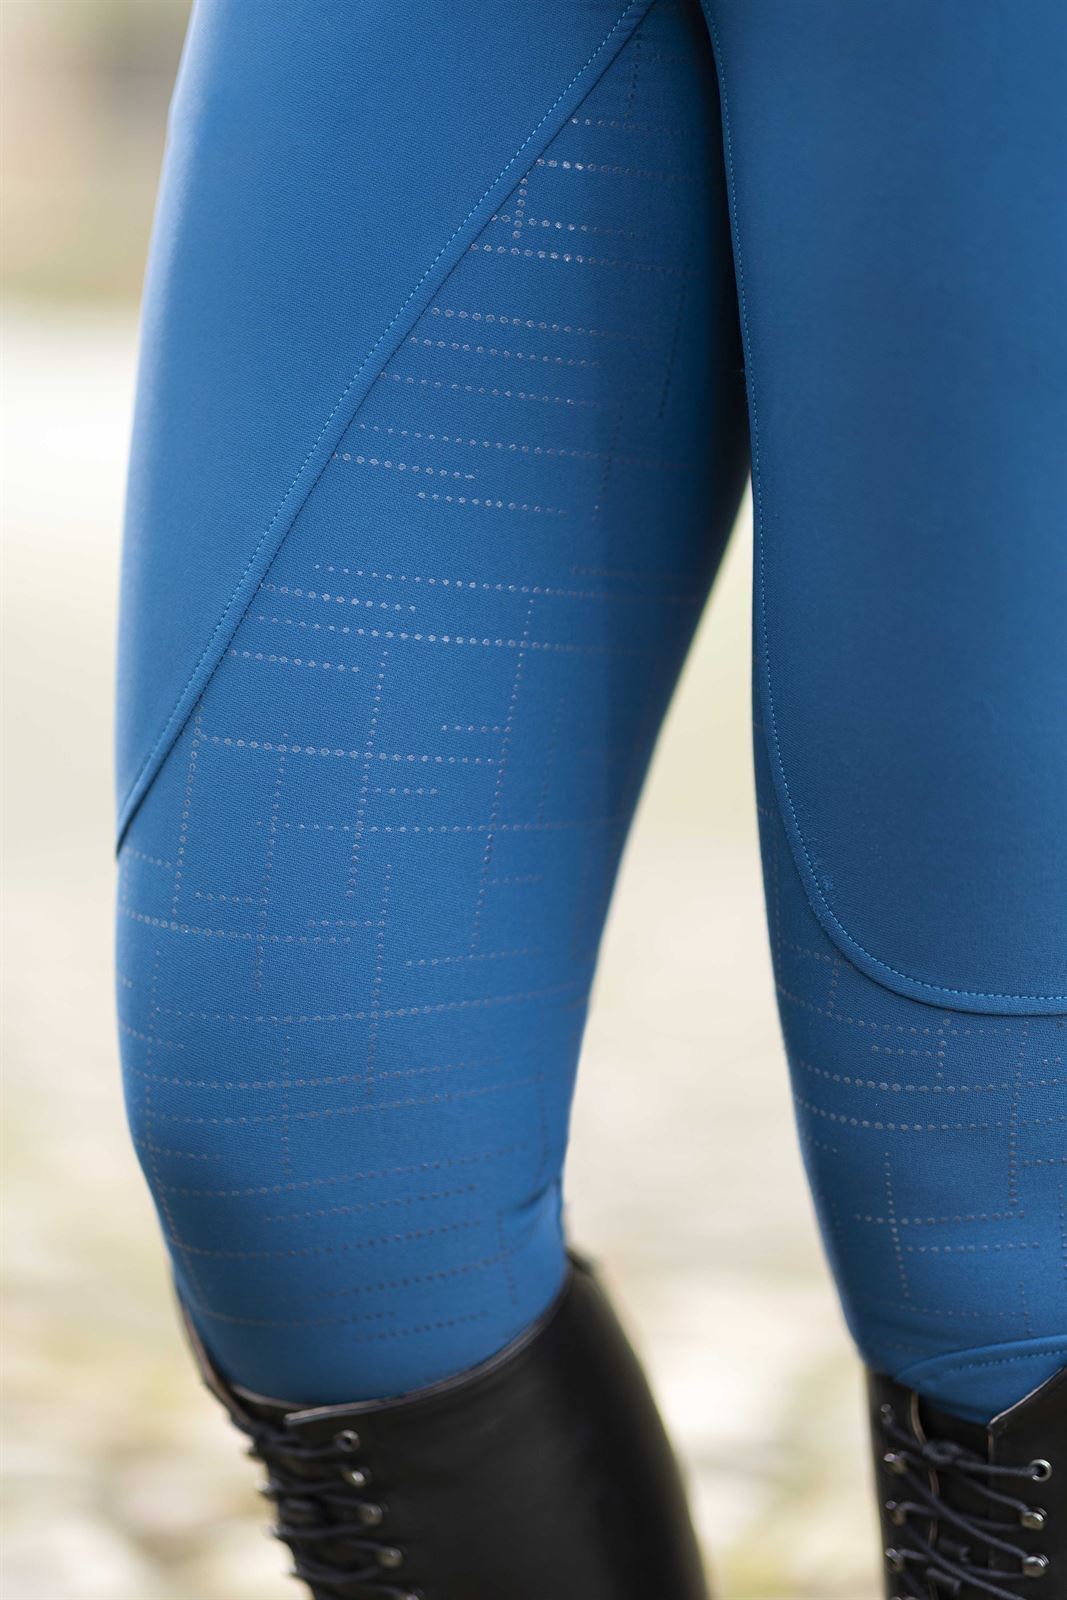 Pantalón mujer HKM Sports Equipment Port royal azul culera grip tejido grueso termoaislante TALLA 34 - Imagen 9